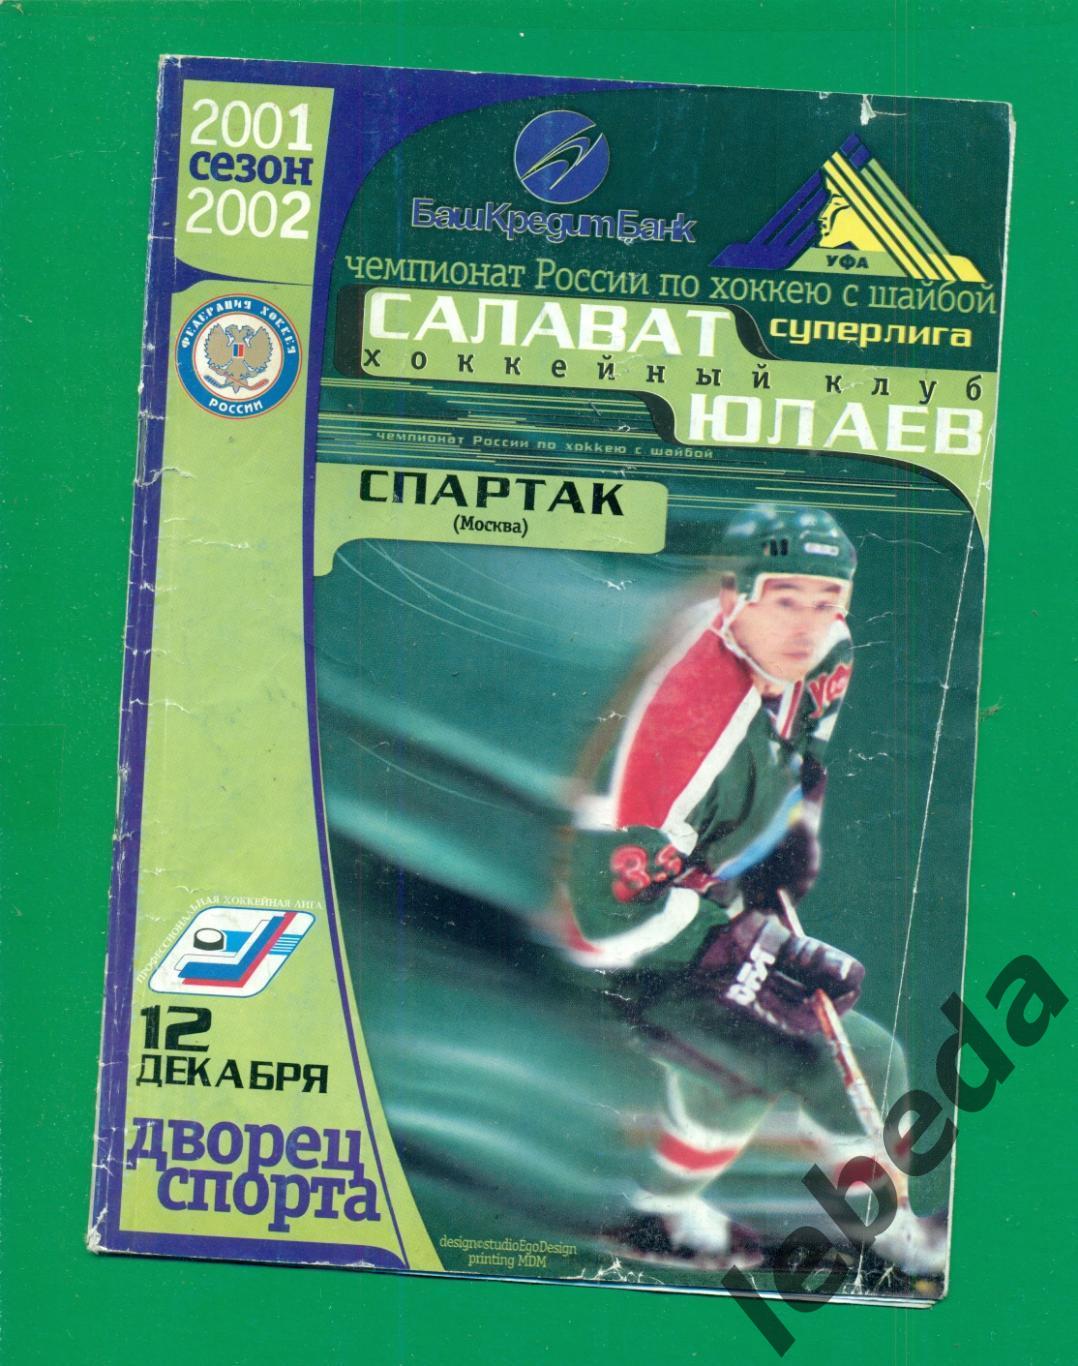 Салават Юлаев ( Уфа ) - Спартак Москва - 2001 / 2002 г. ( 12.12.01.)